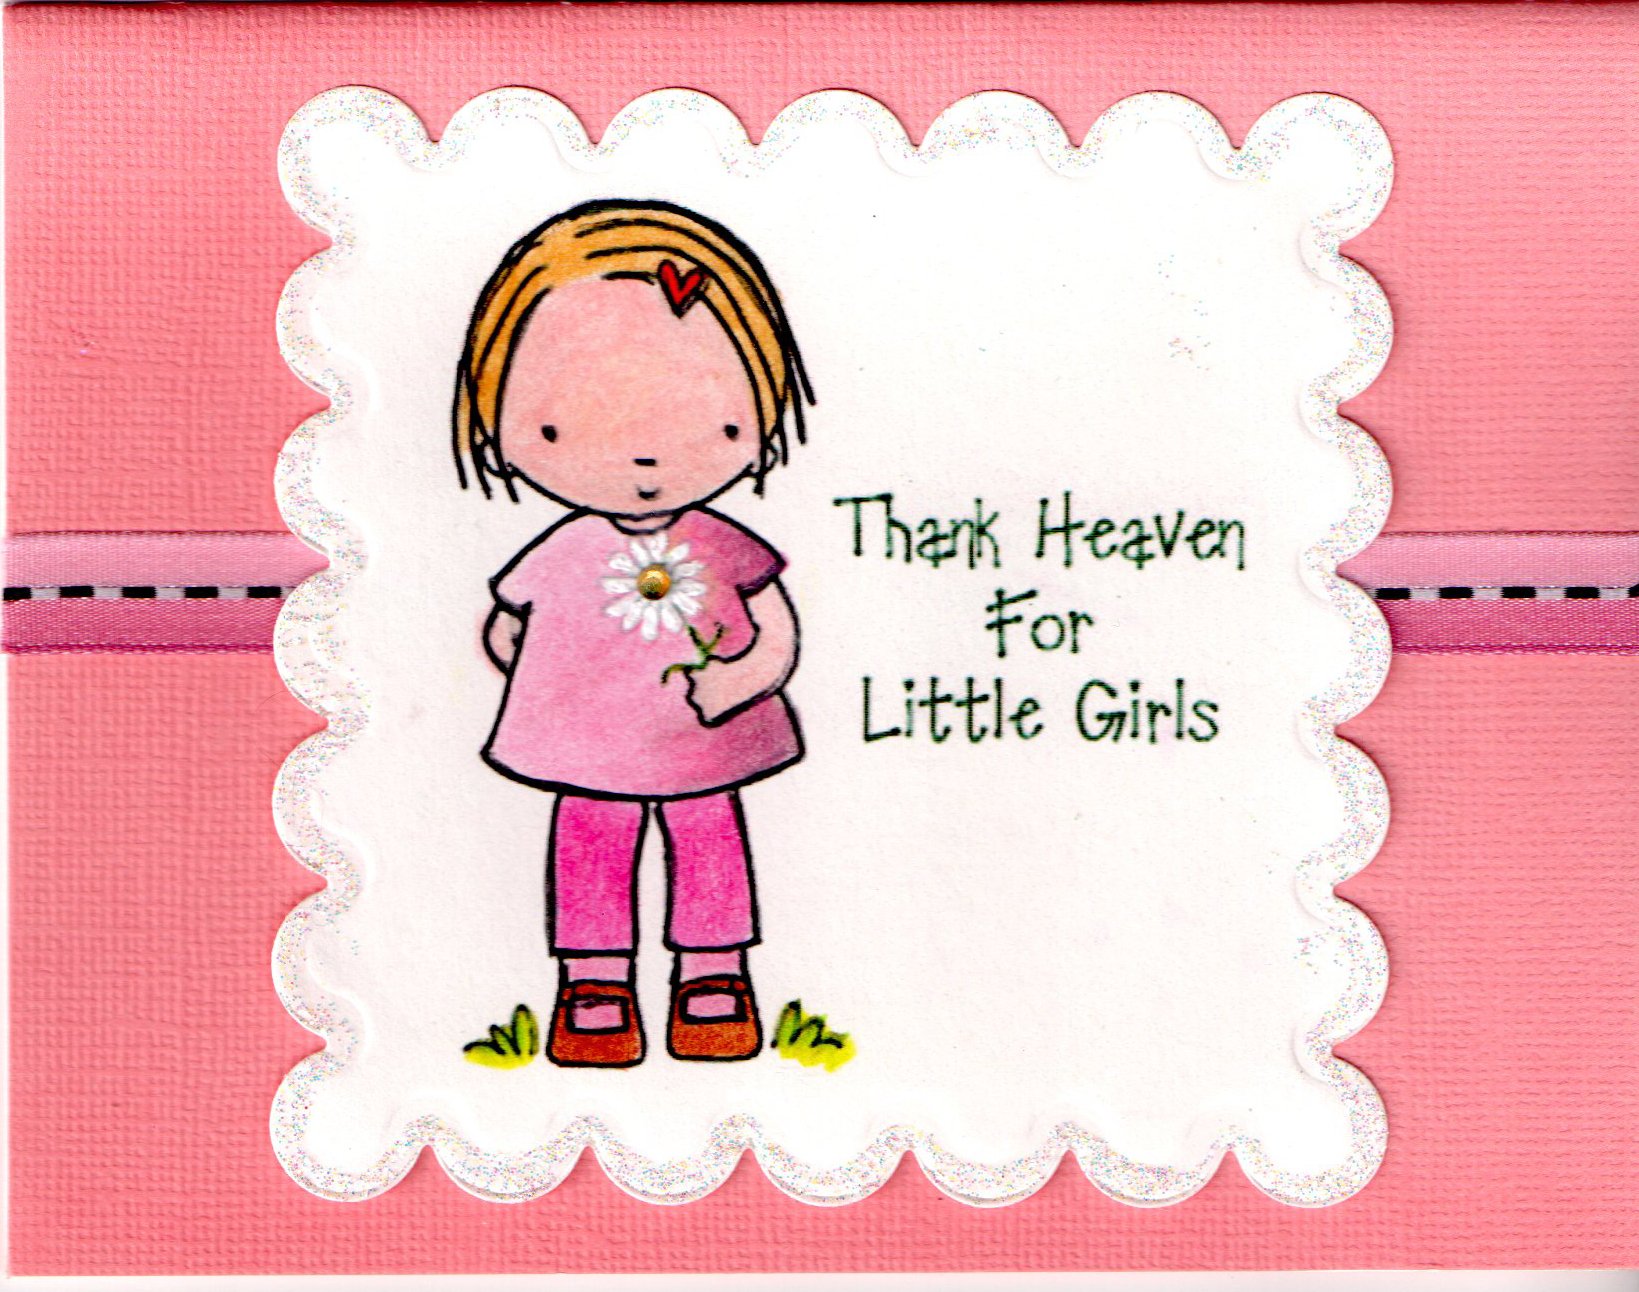 happy-birthday-little-girl-princess-free-for-kids-ecards-123-greetings